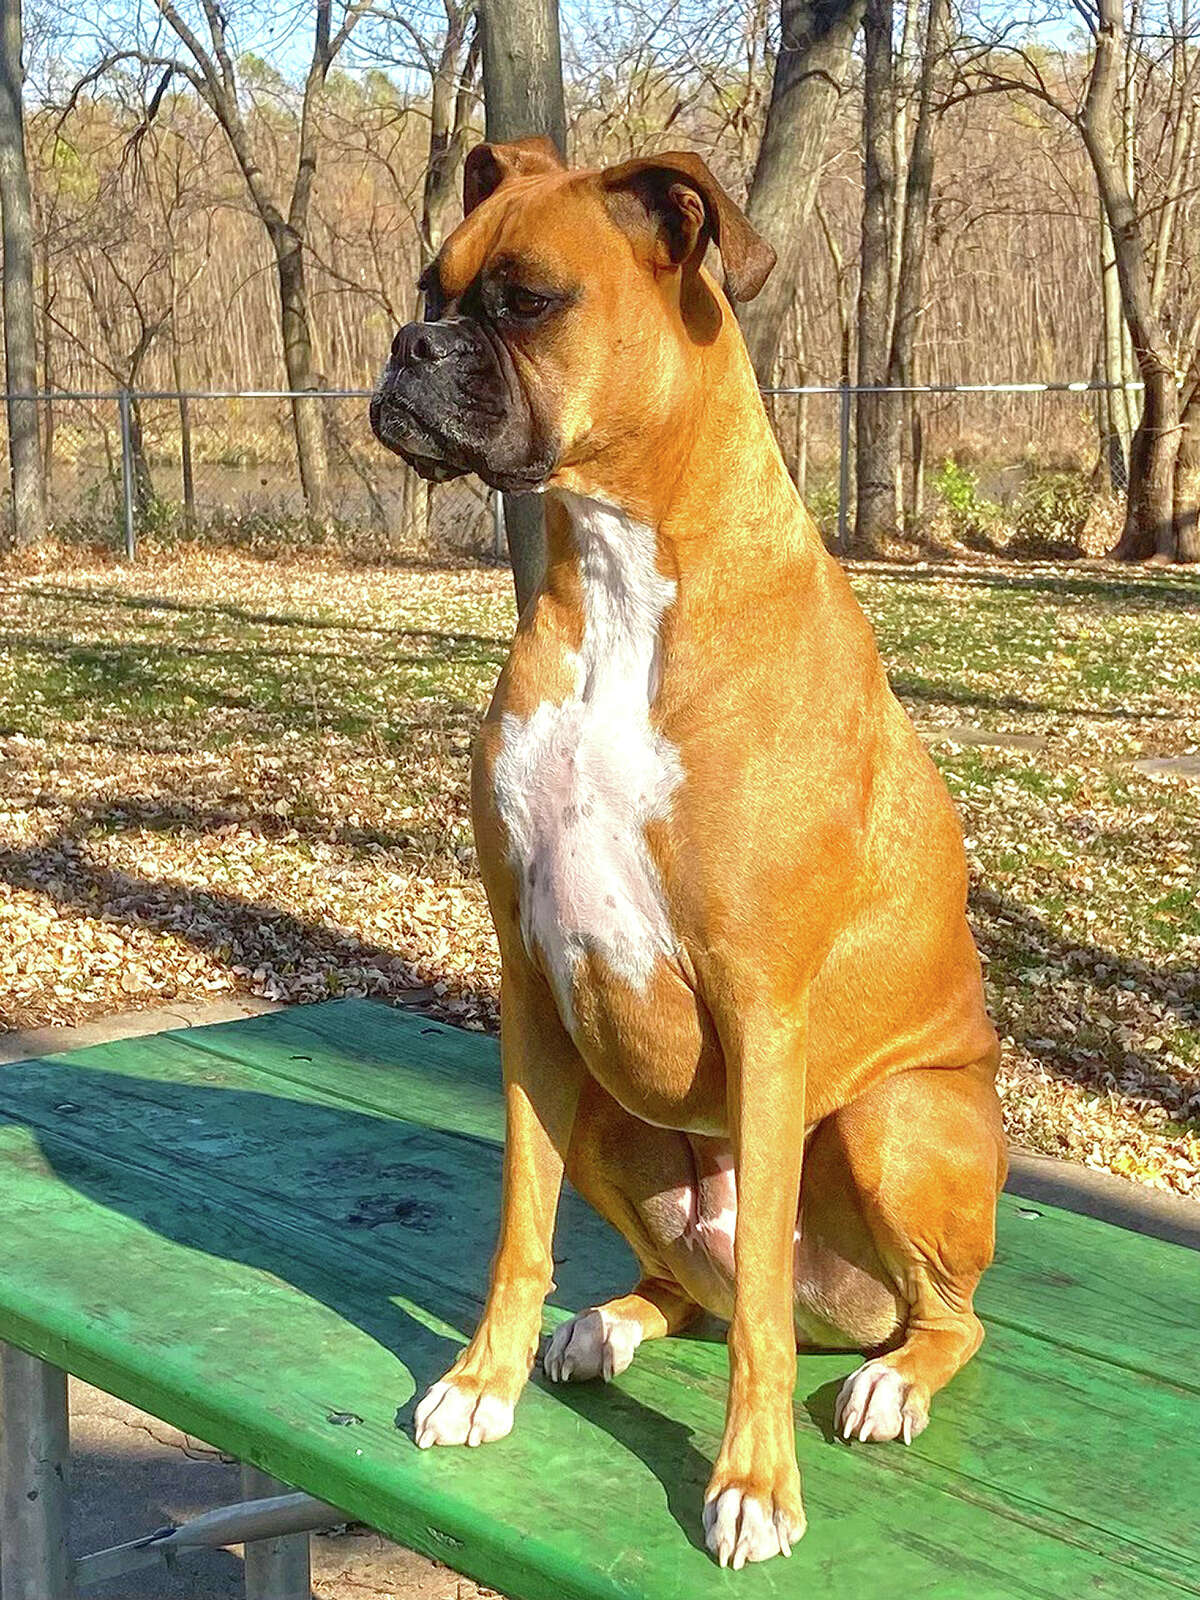 Tess enjoys a sunny day at the dog park.